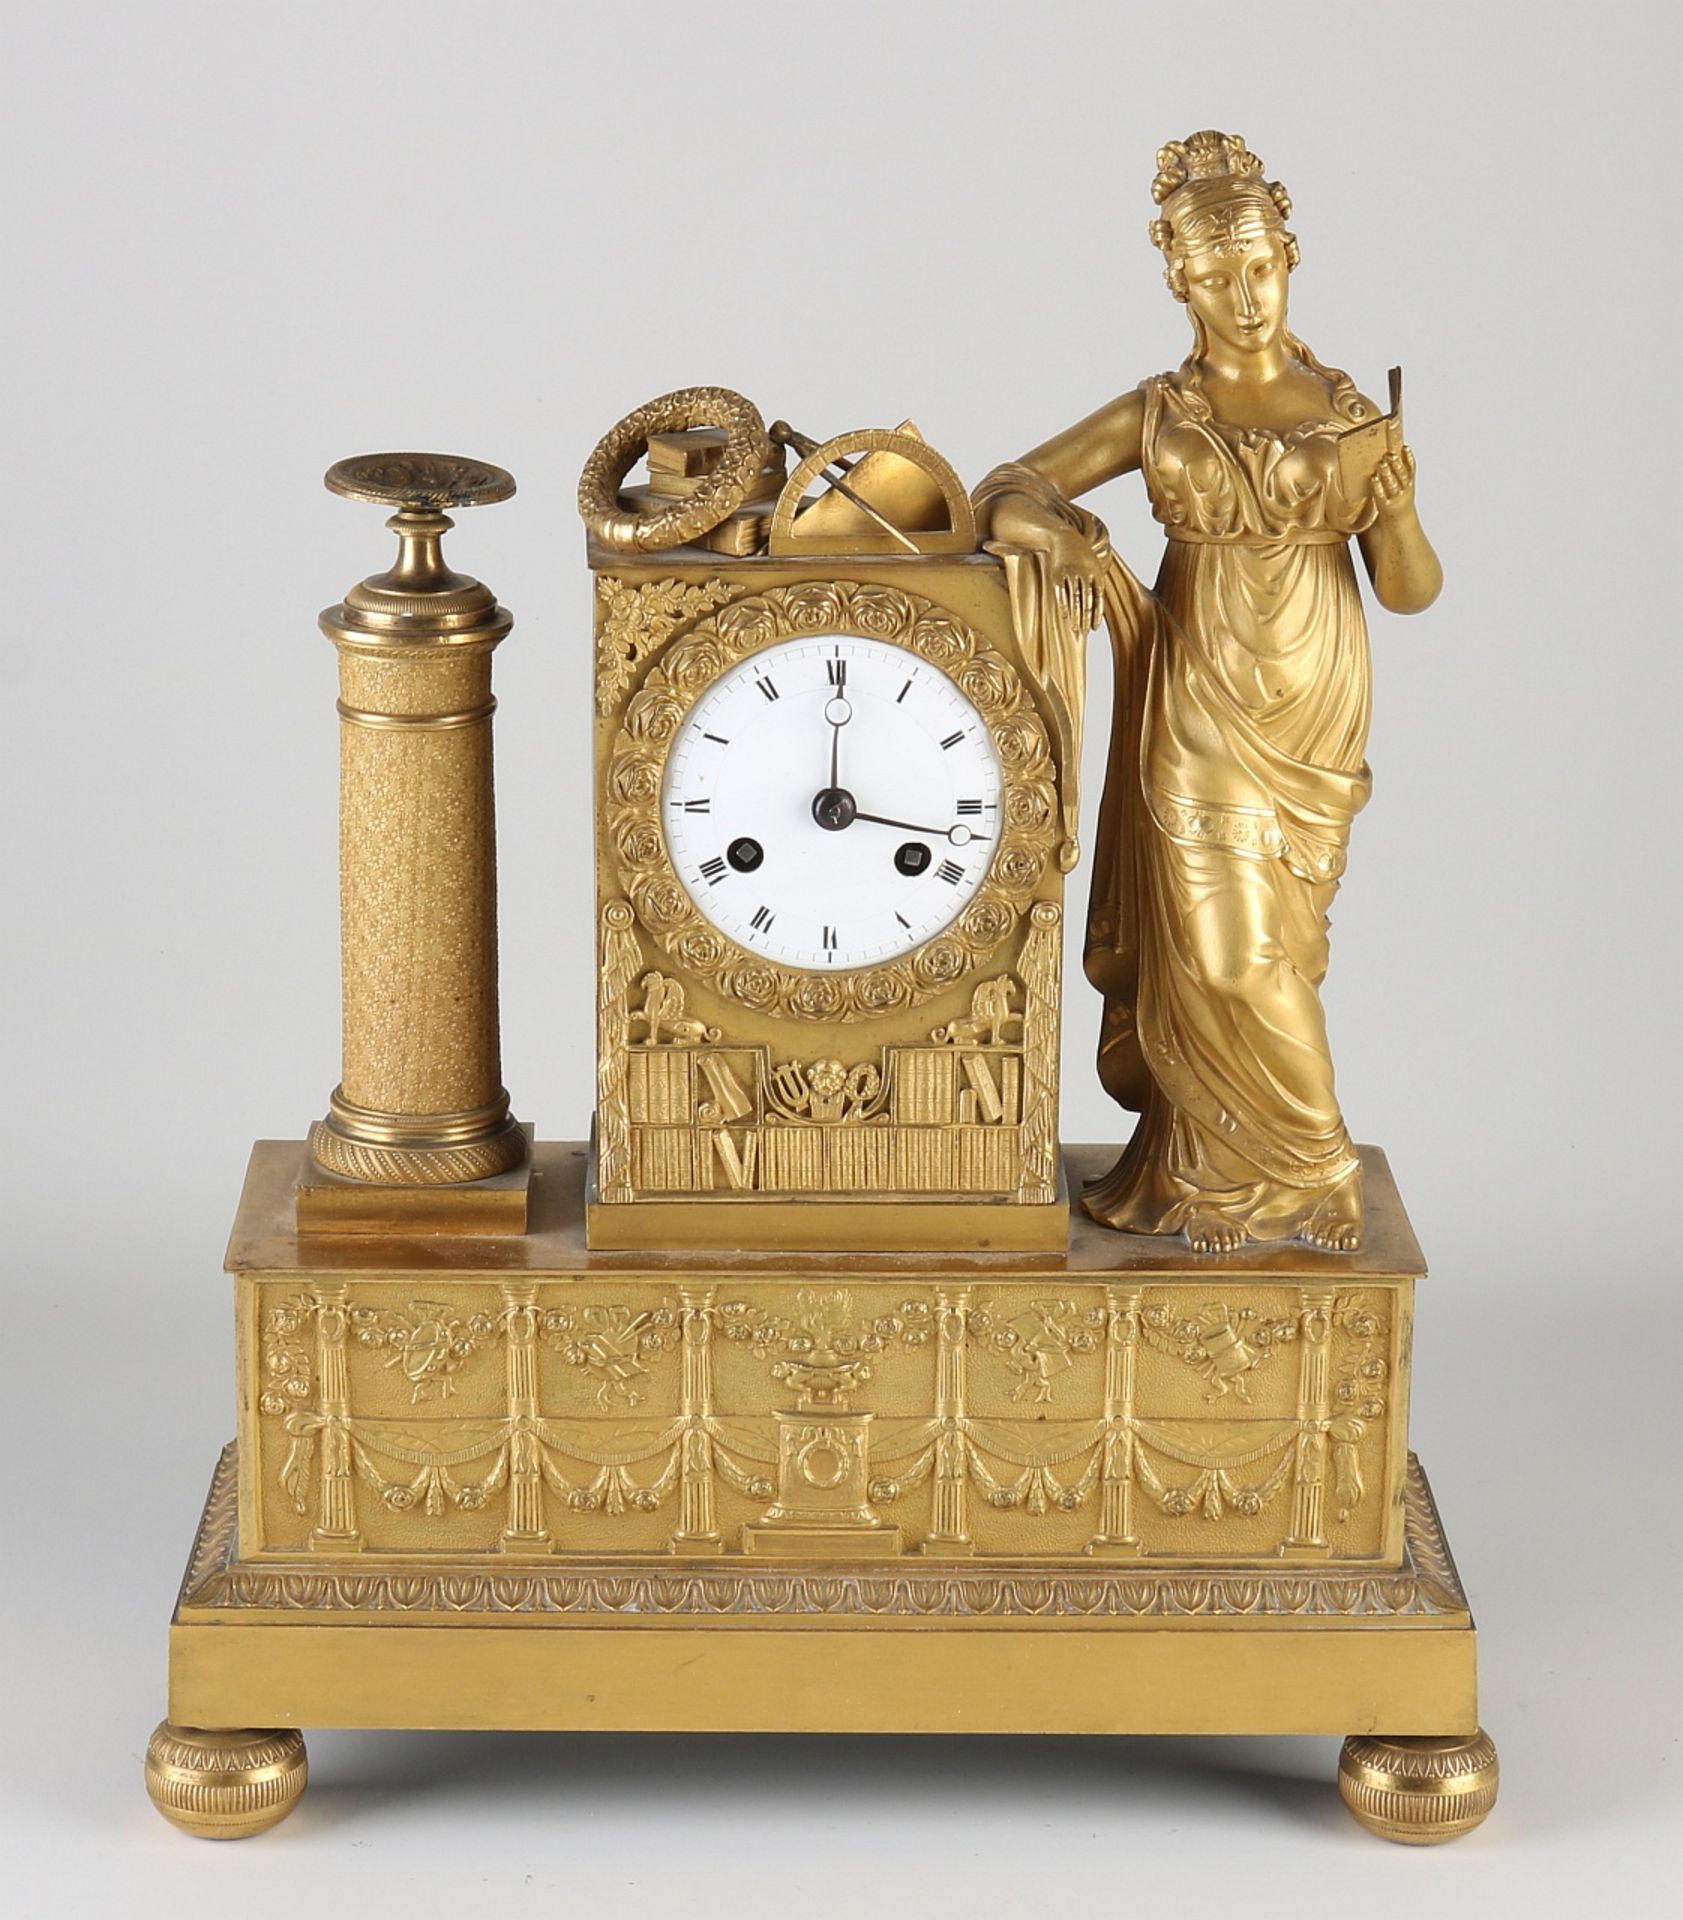 French fire-gilt mantel clock, 1820